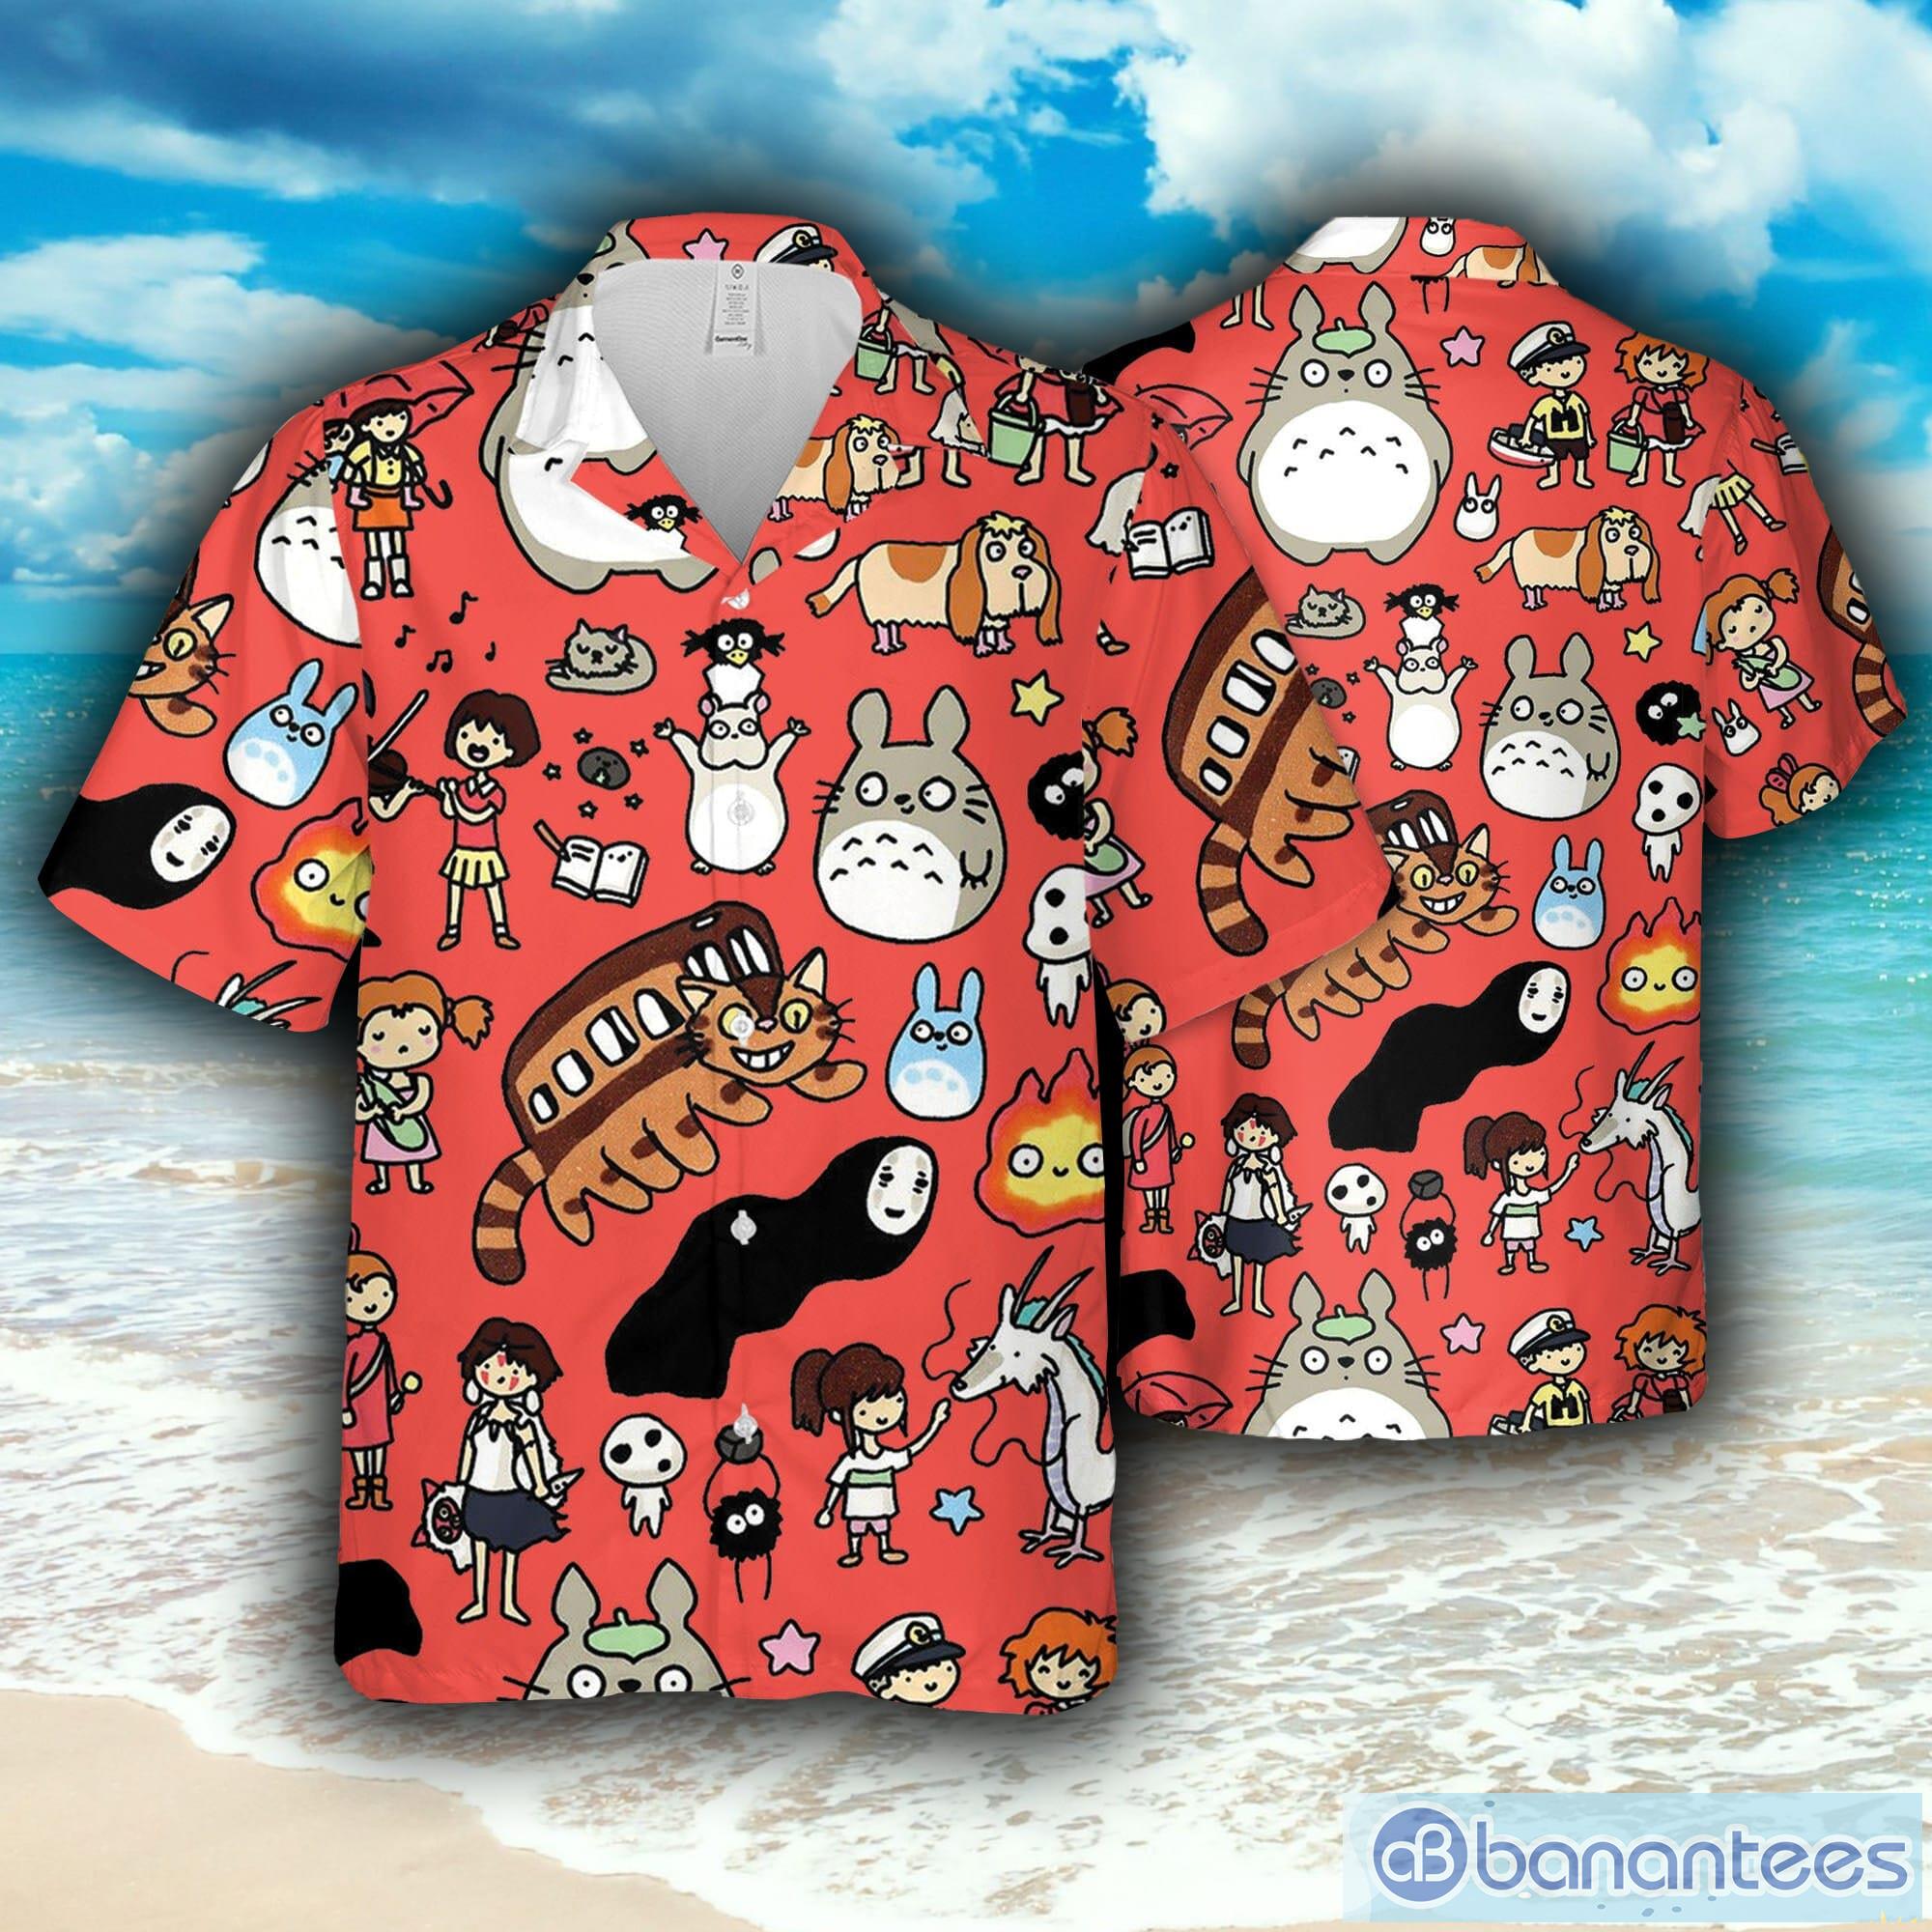 Studio Ghibli is now selling Hawaiian shirts and Totoro-themed